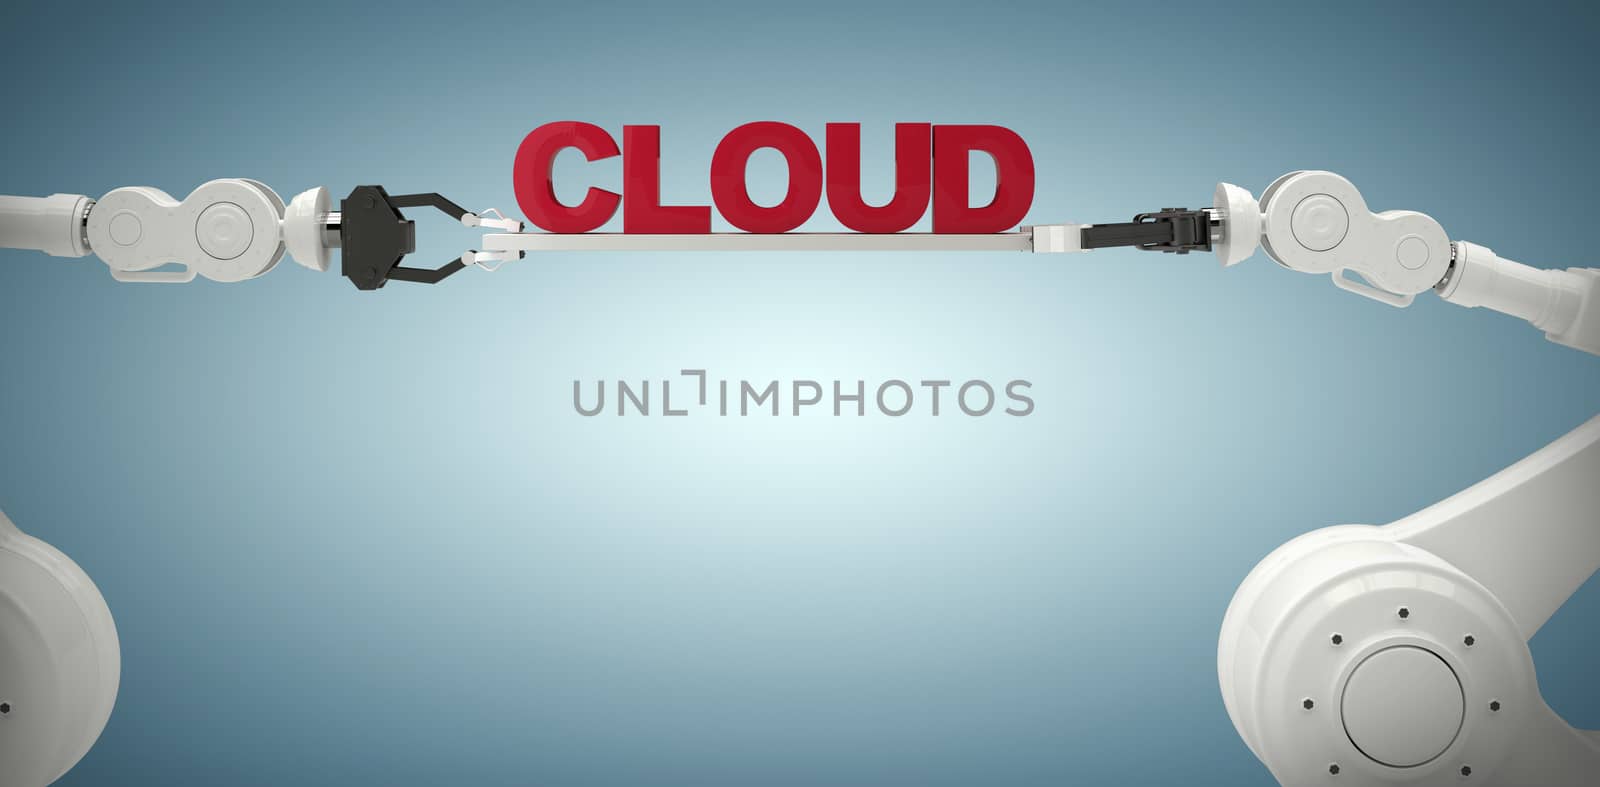 Digitally composite image of robotic hands holding cloud text against grey vignette